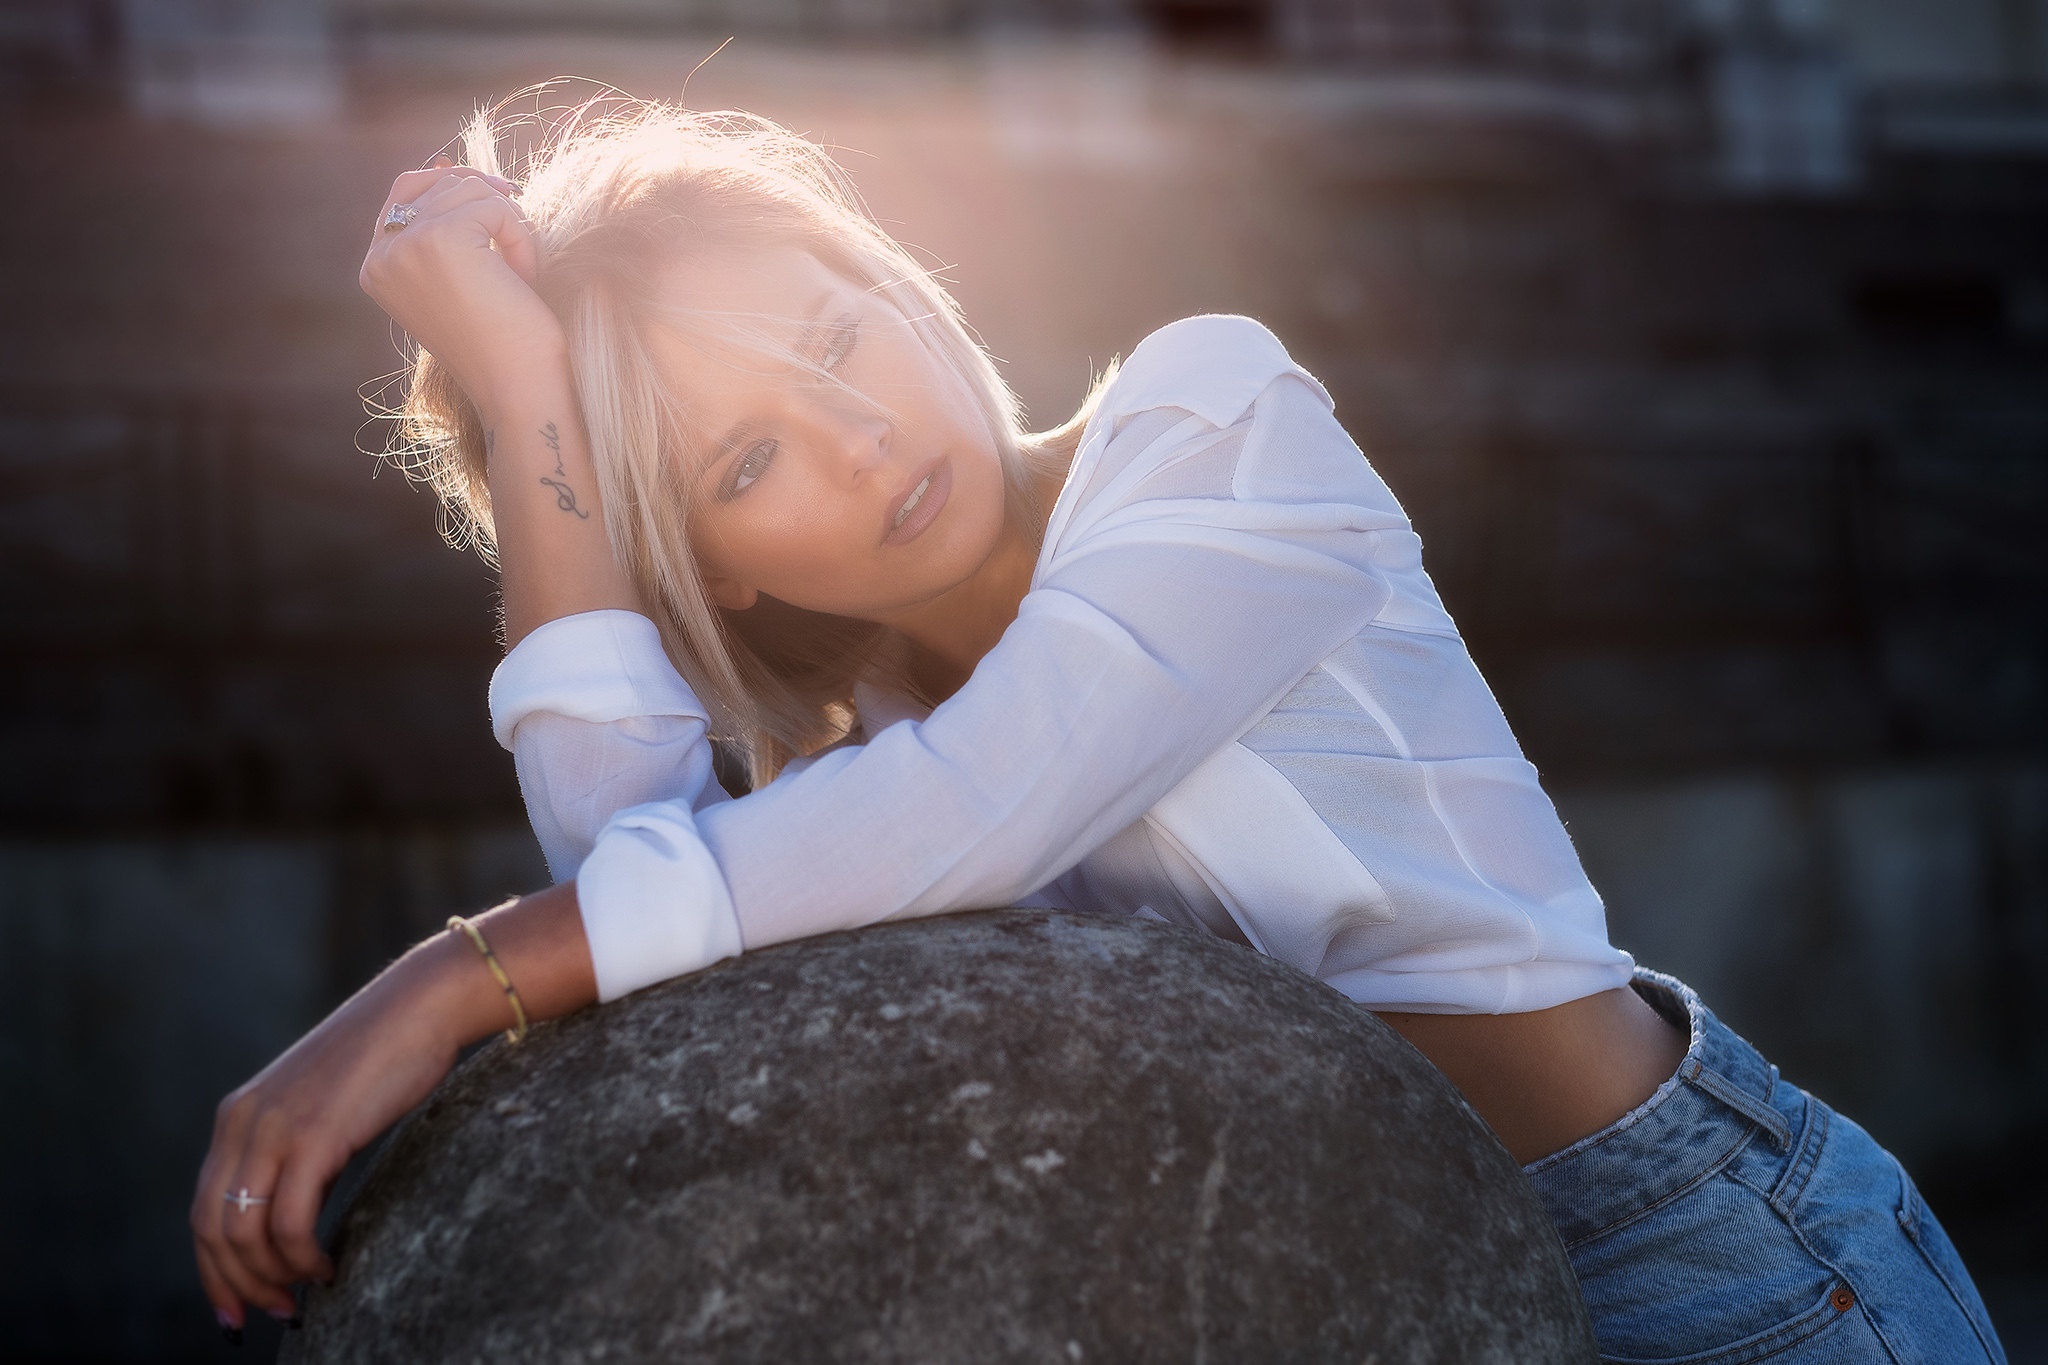 Alex Siracusano Model Women Blonde Blue Eyes Parted Lips Shirt White Shirt Jeans Hips Tattoo Rocks S 2048x1365